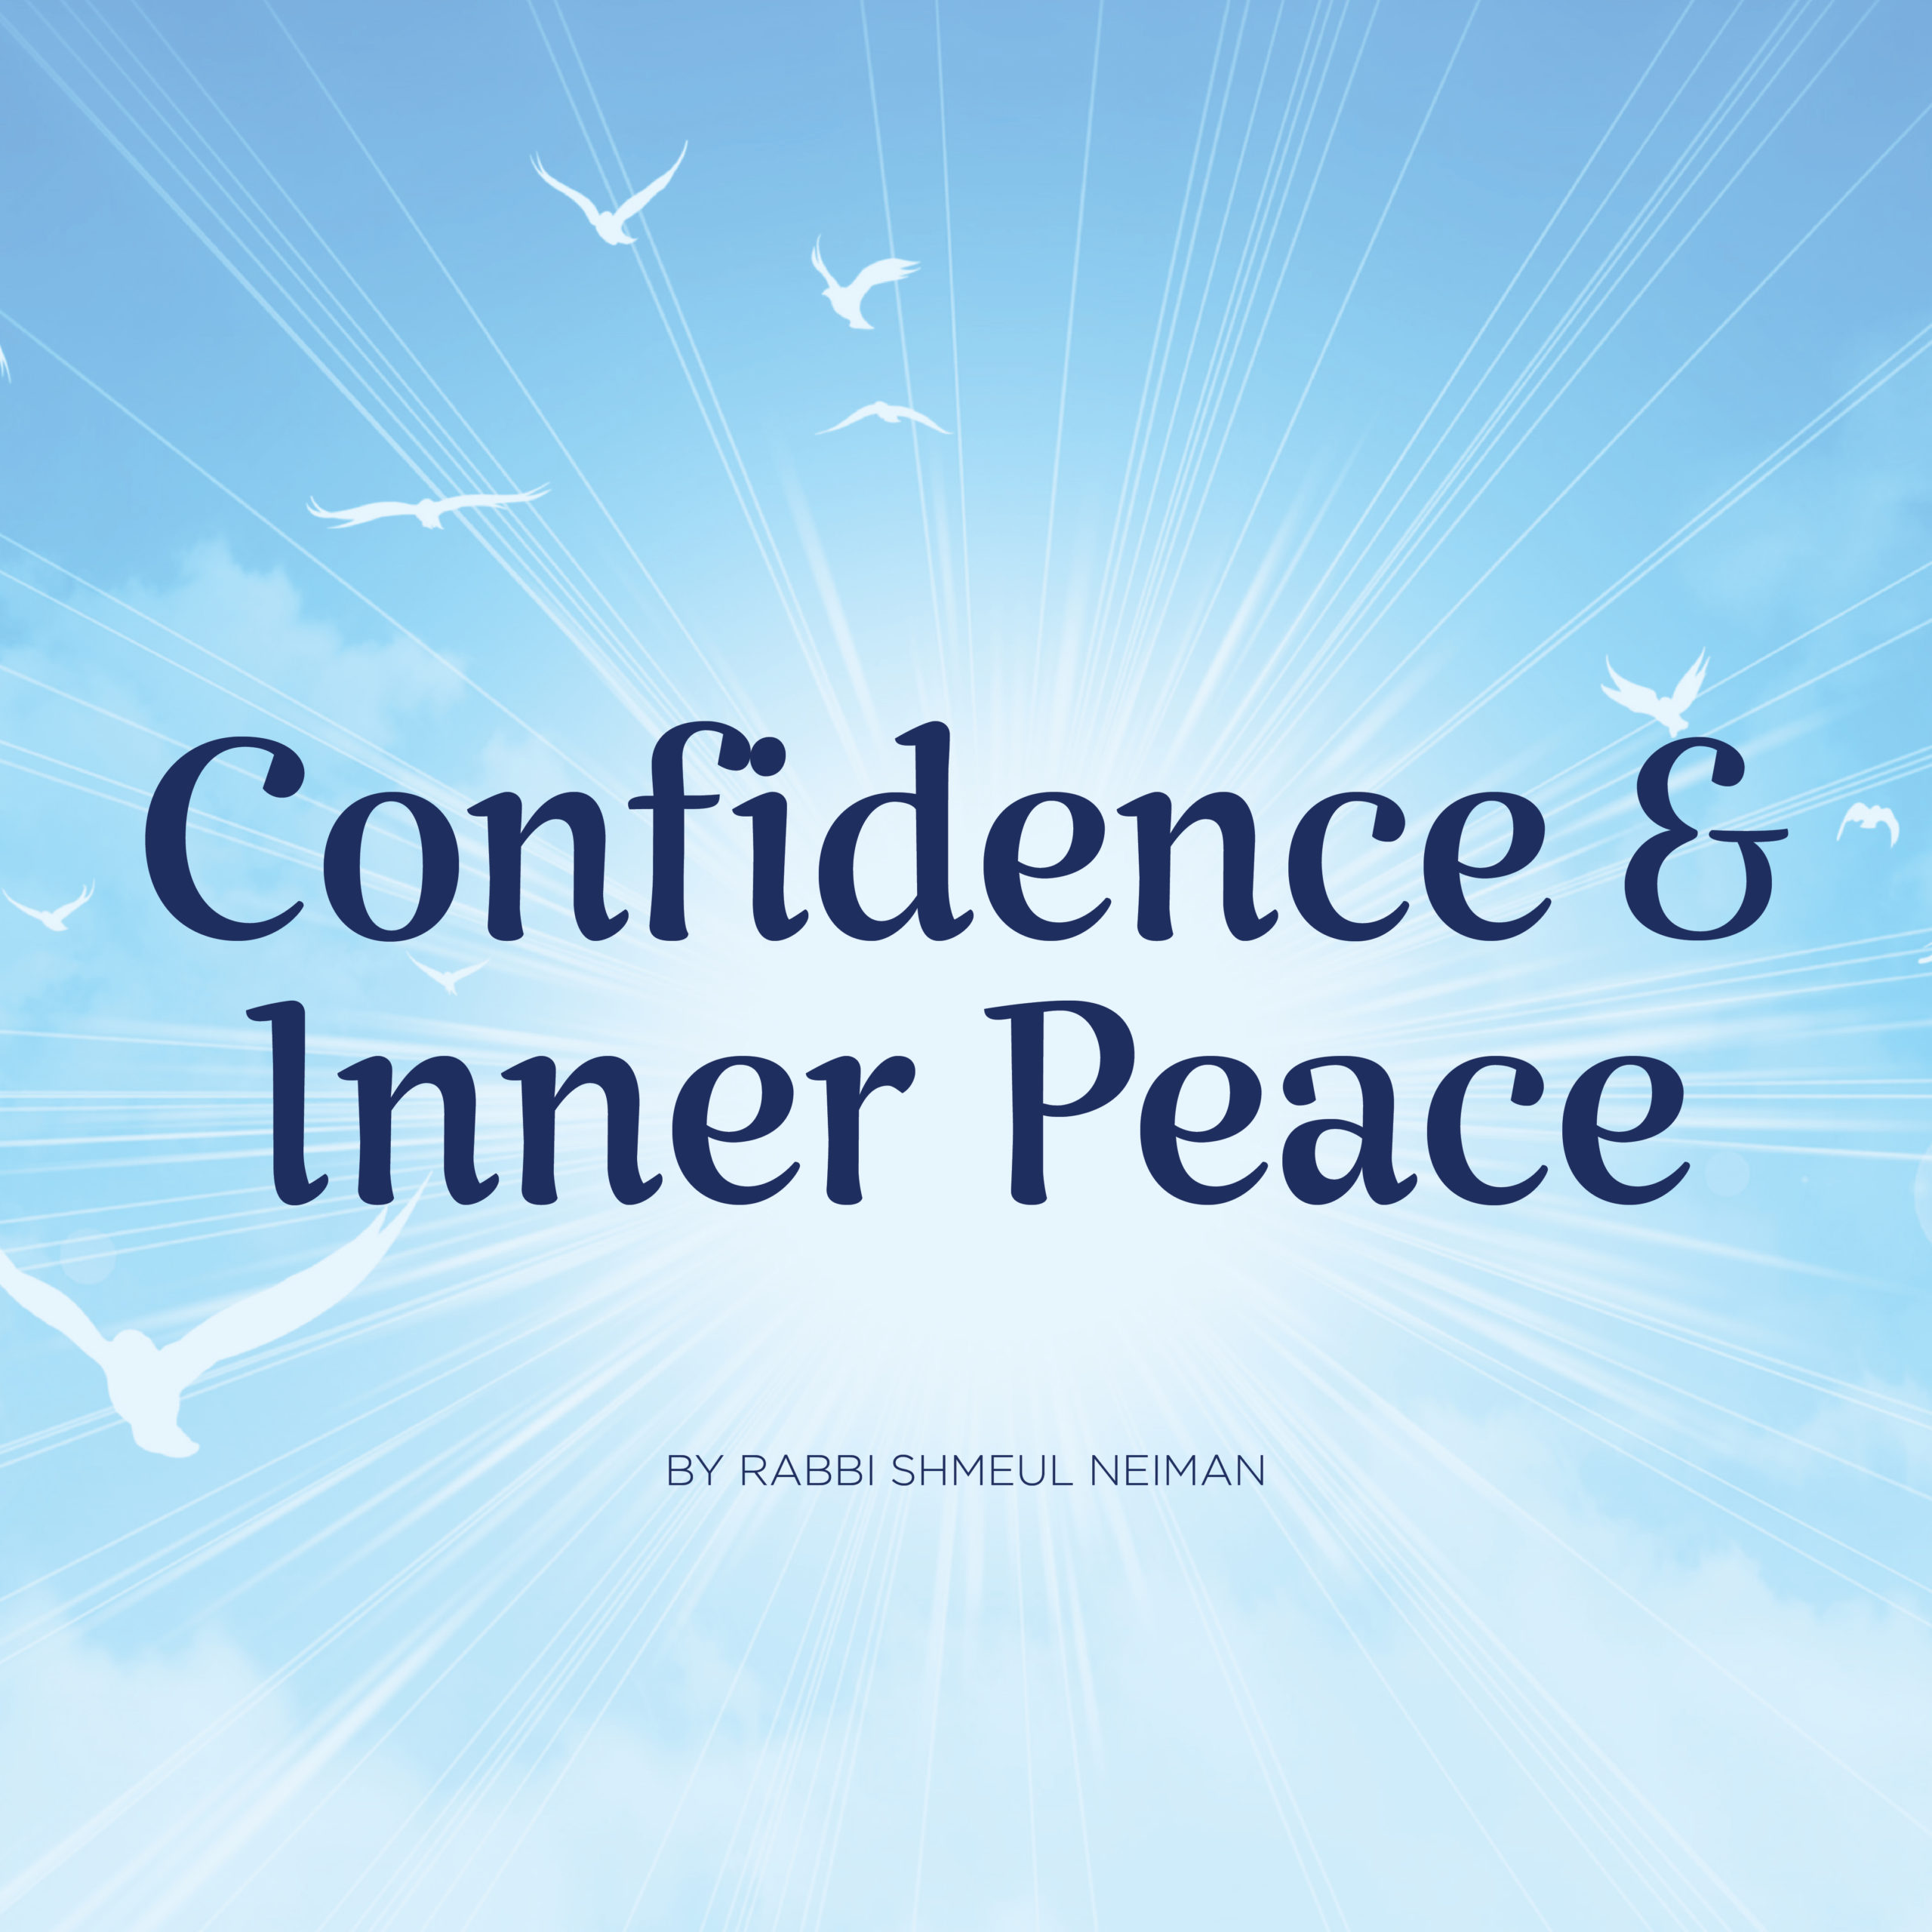 Confidence & Inner Peace